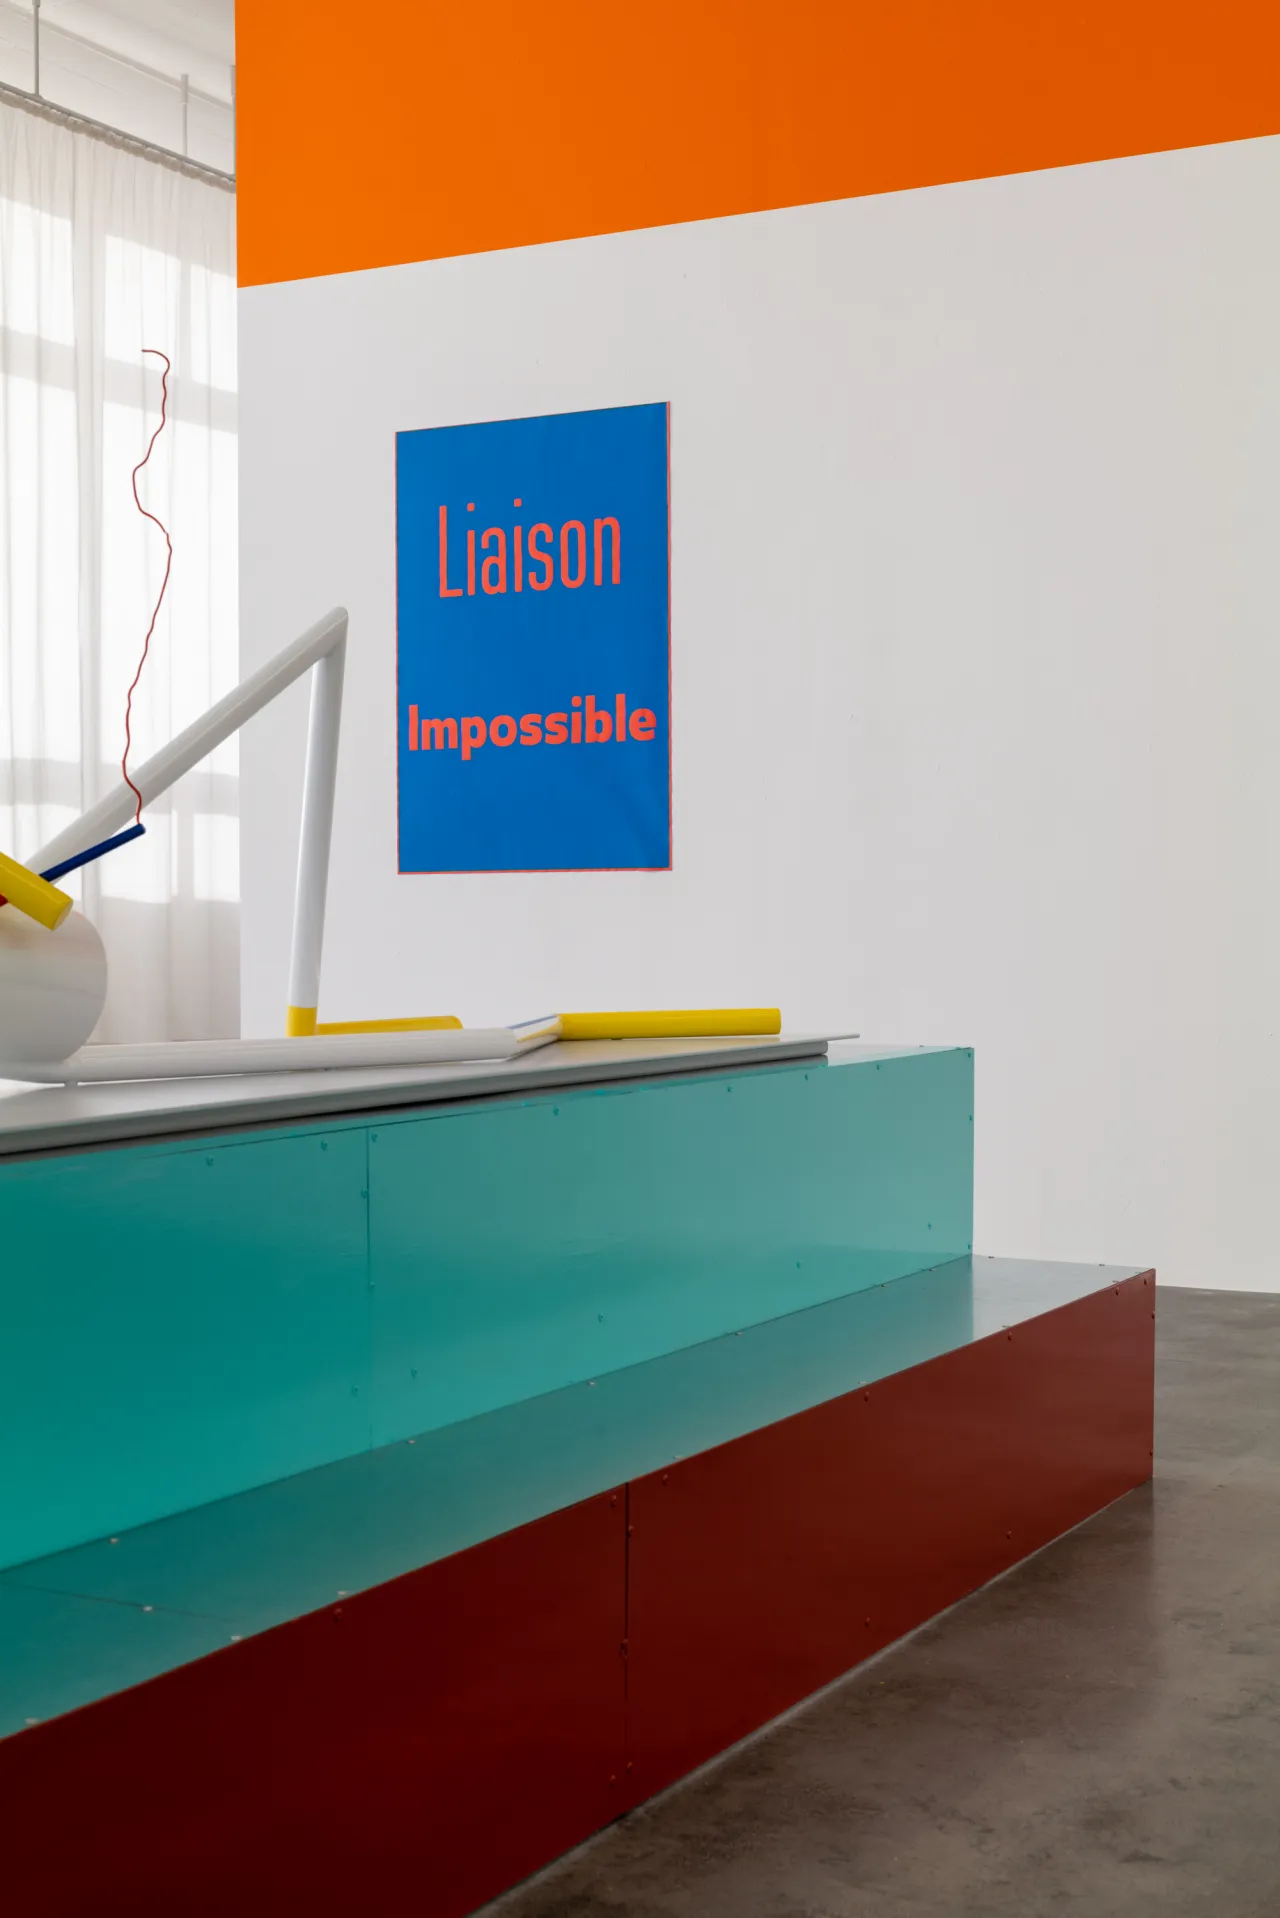 Wilhelm Klotzek, <em>Liaison impossible</em>, 2019, Siebdruck auf Papier, 70 x 100 cm.